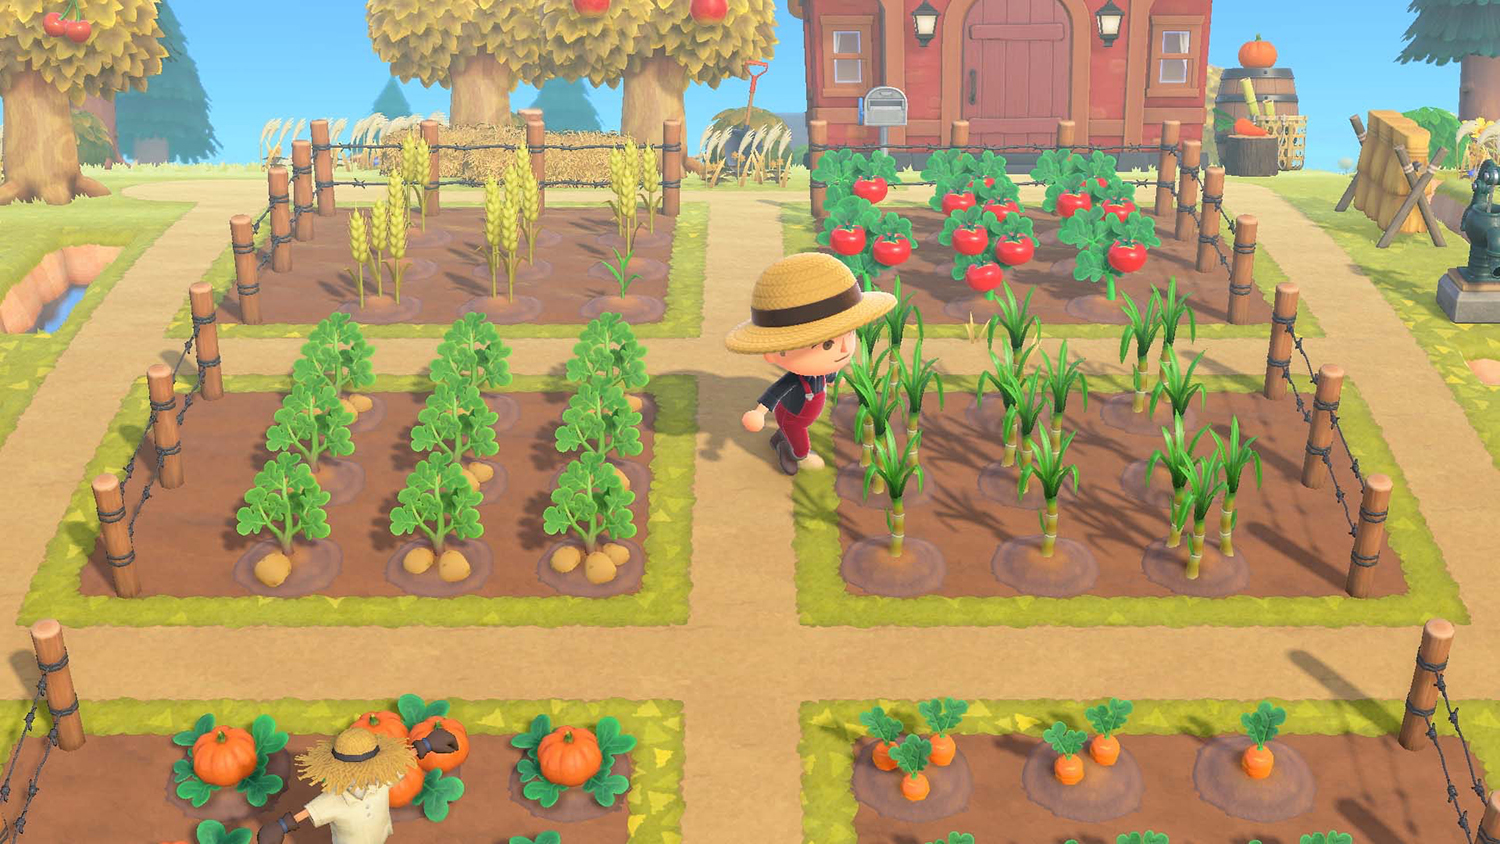 Farming in Animal Crossing: New Horizons Update 2.0